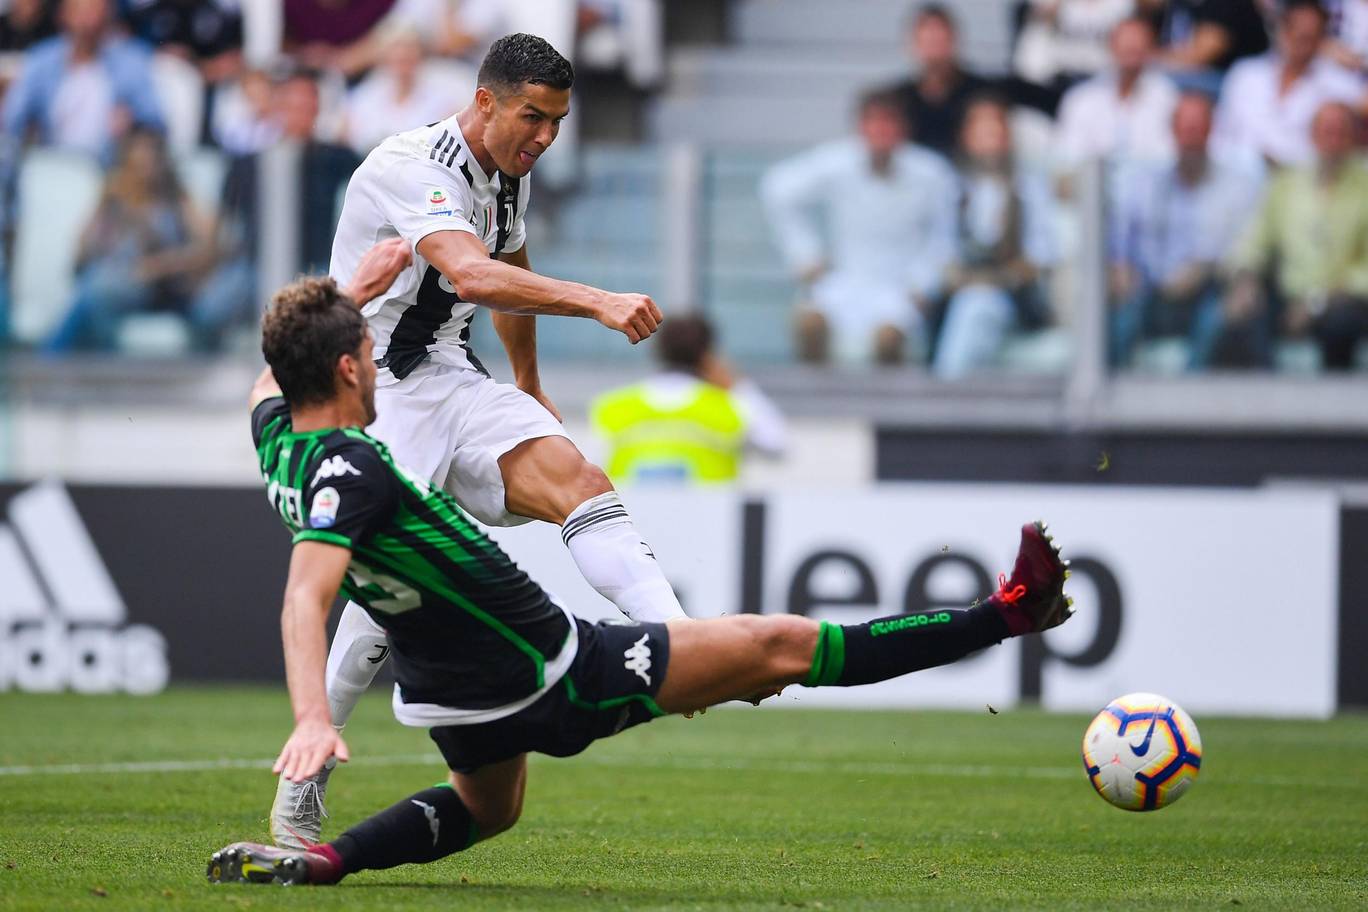 cristiano ronaldo juventus 160918c Cristiano Ronaldo became the 5th Player to score 400 league goals in Europe